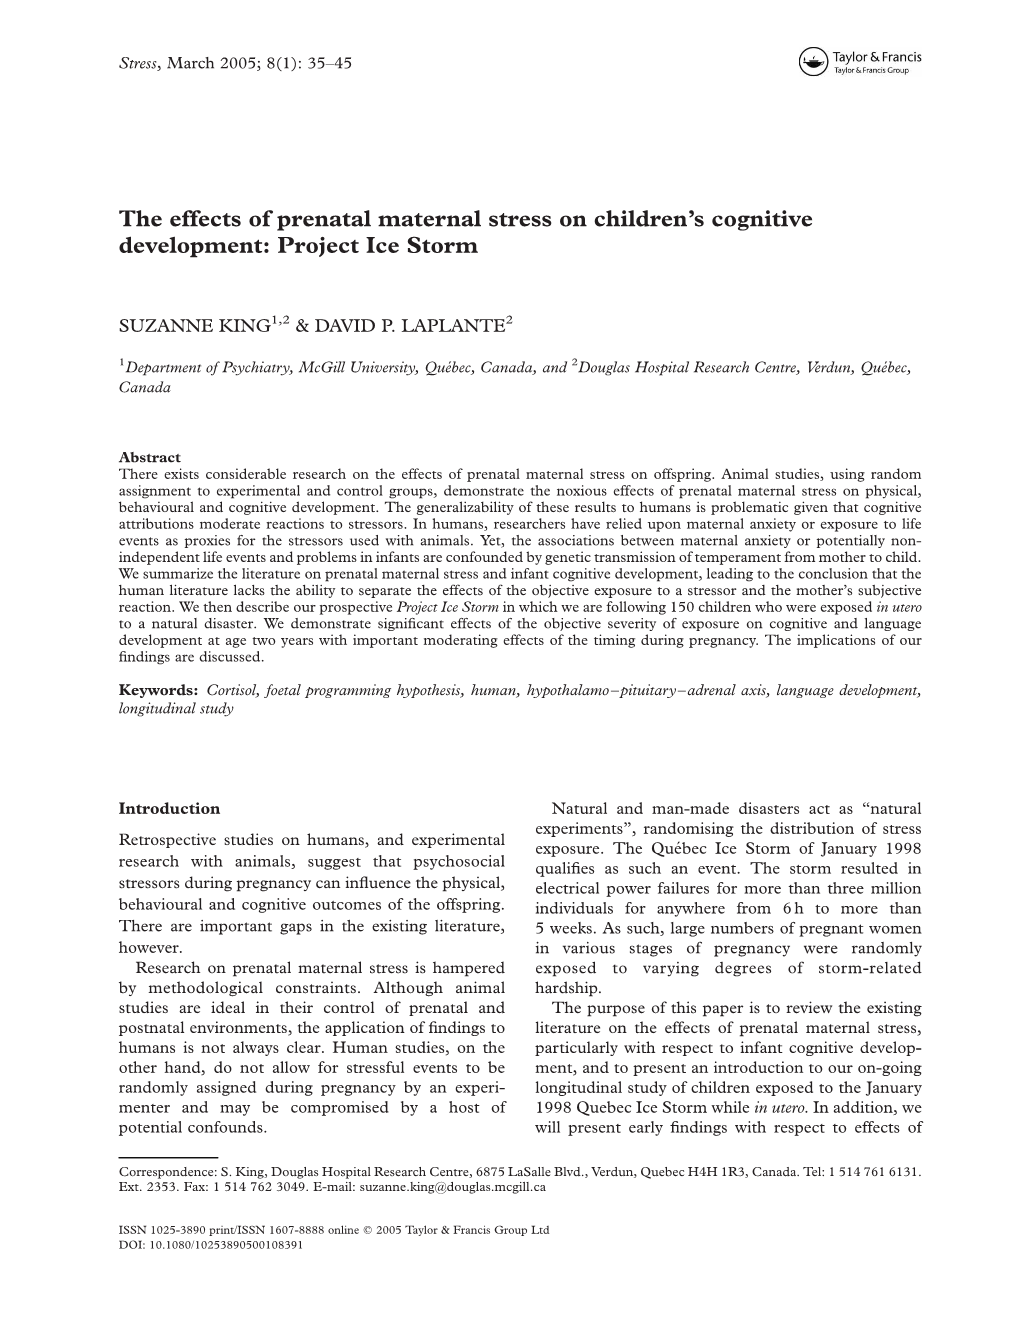 The Effects of Prenatal Maternal Stress on Children's Cognitive Development